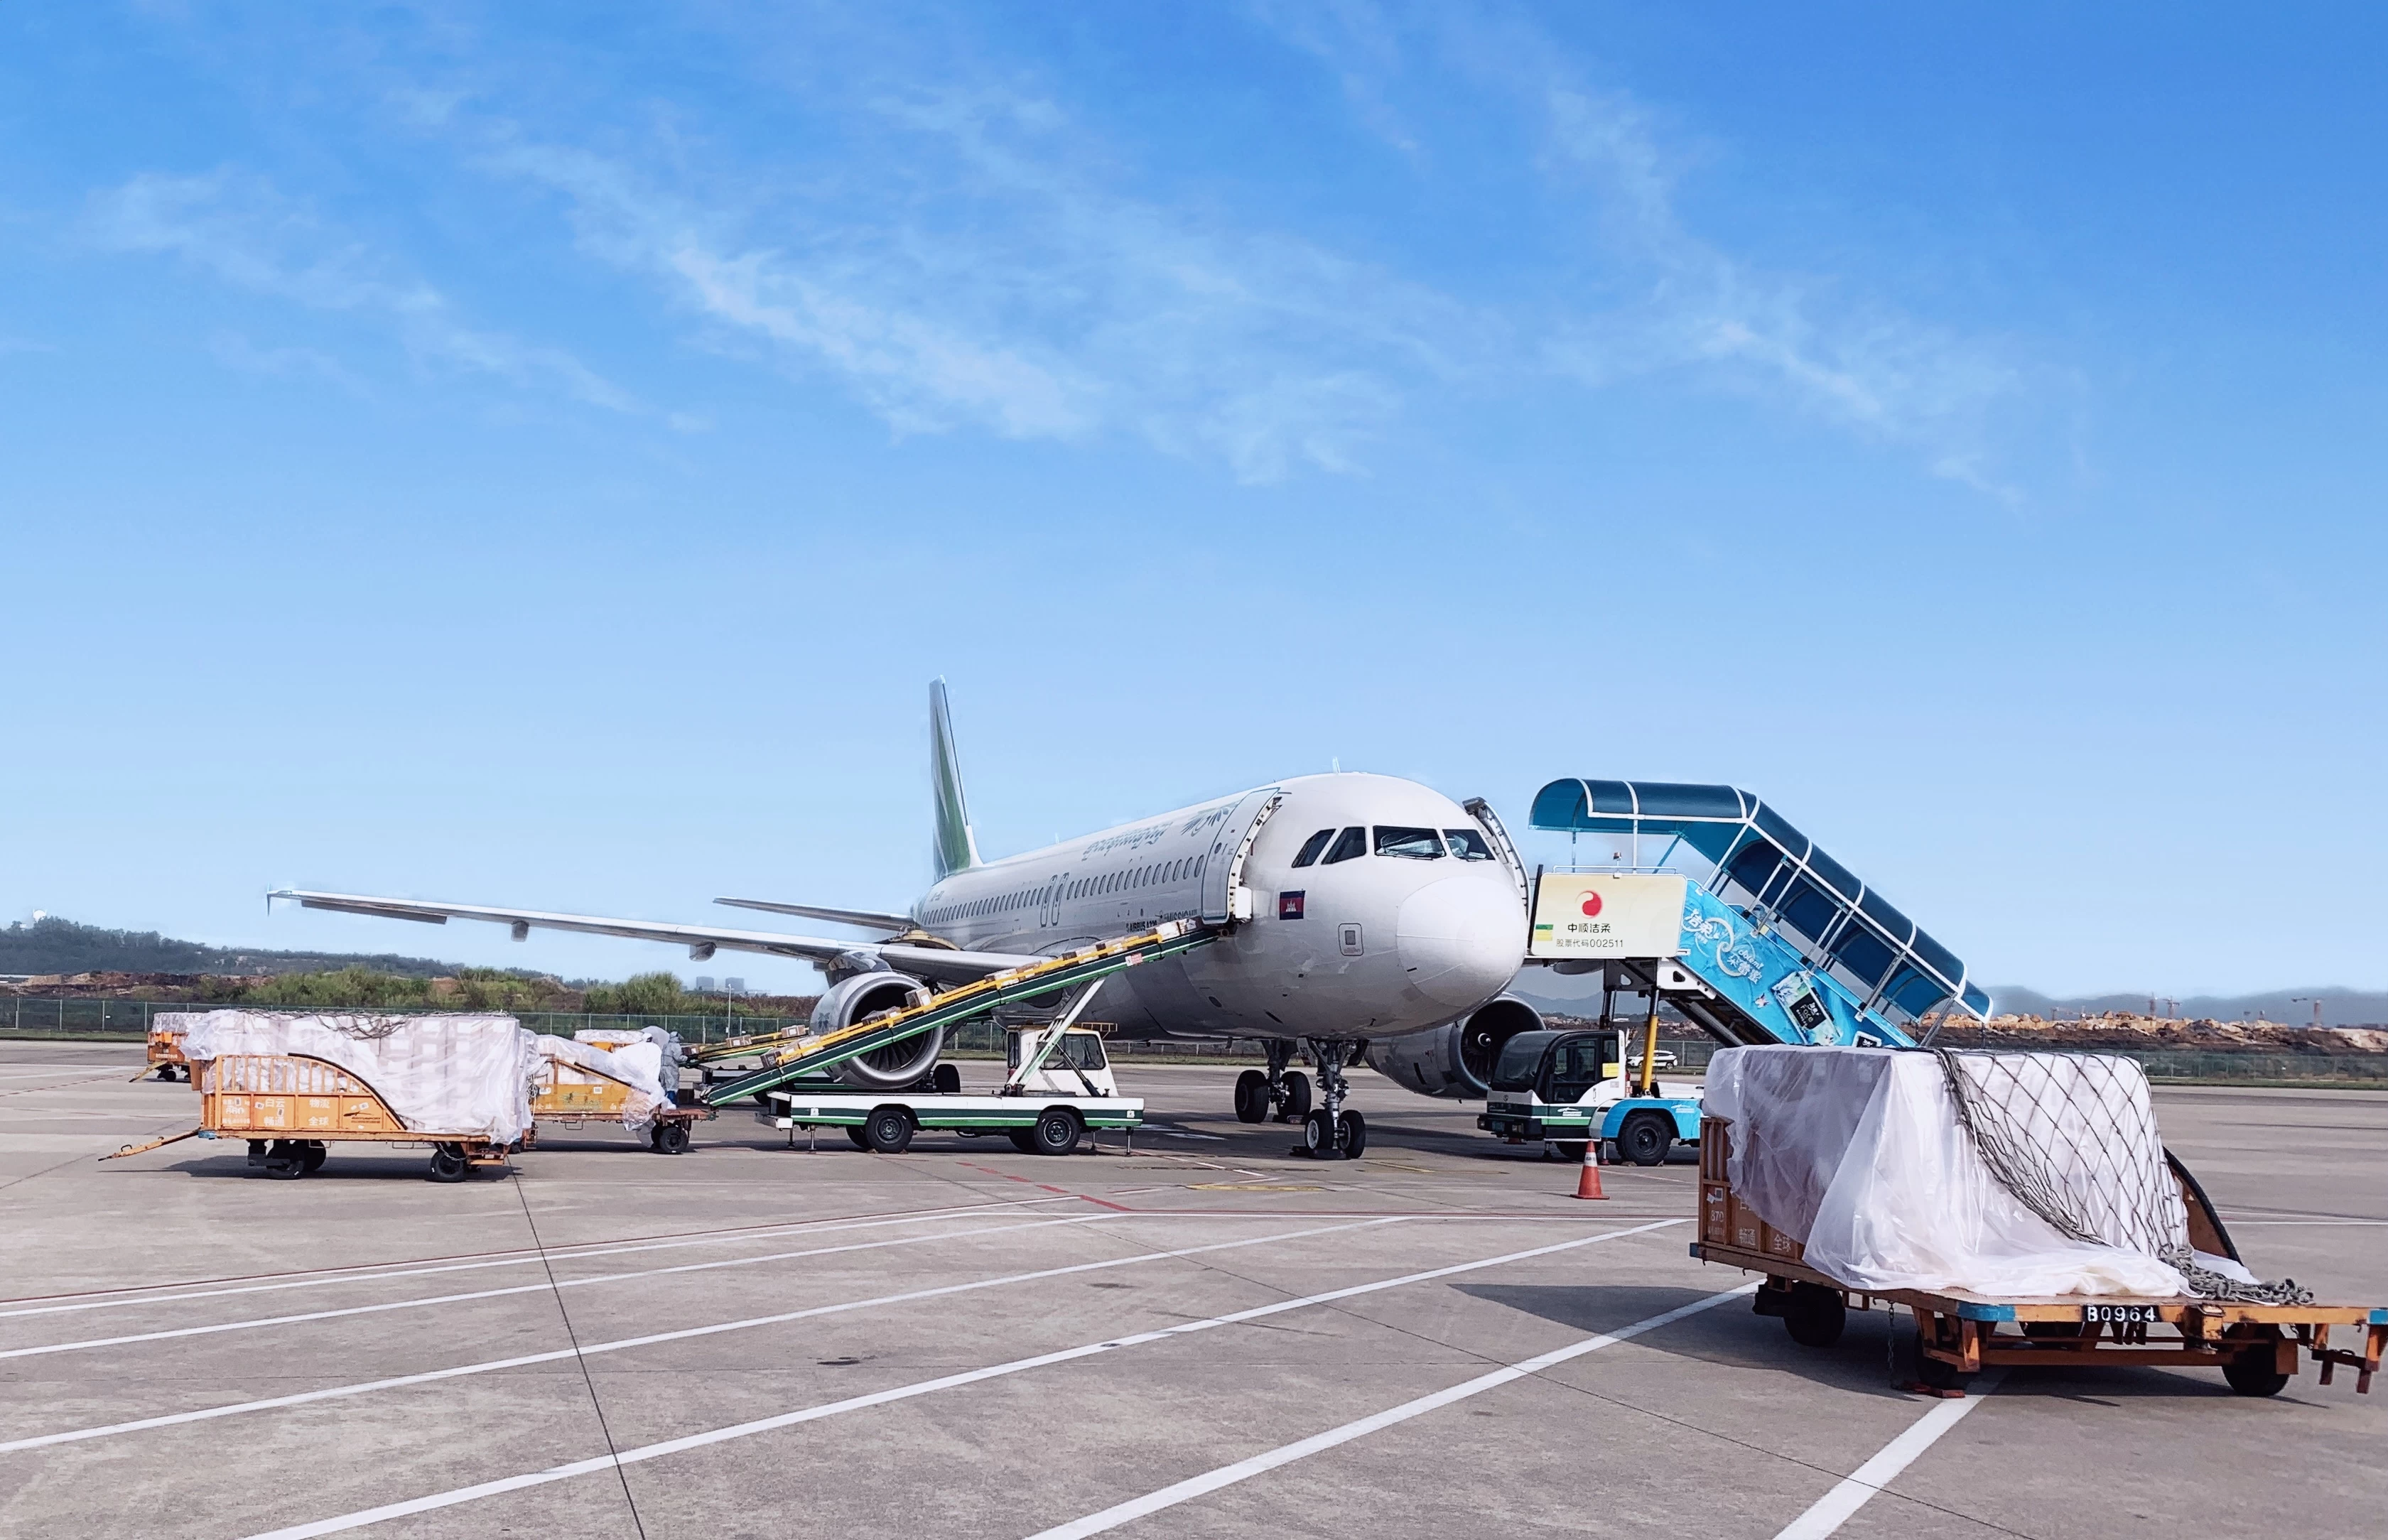 Frieght forwarder air shipping from China Hongkong  to  manila Philippines door to door service 